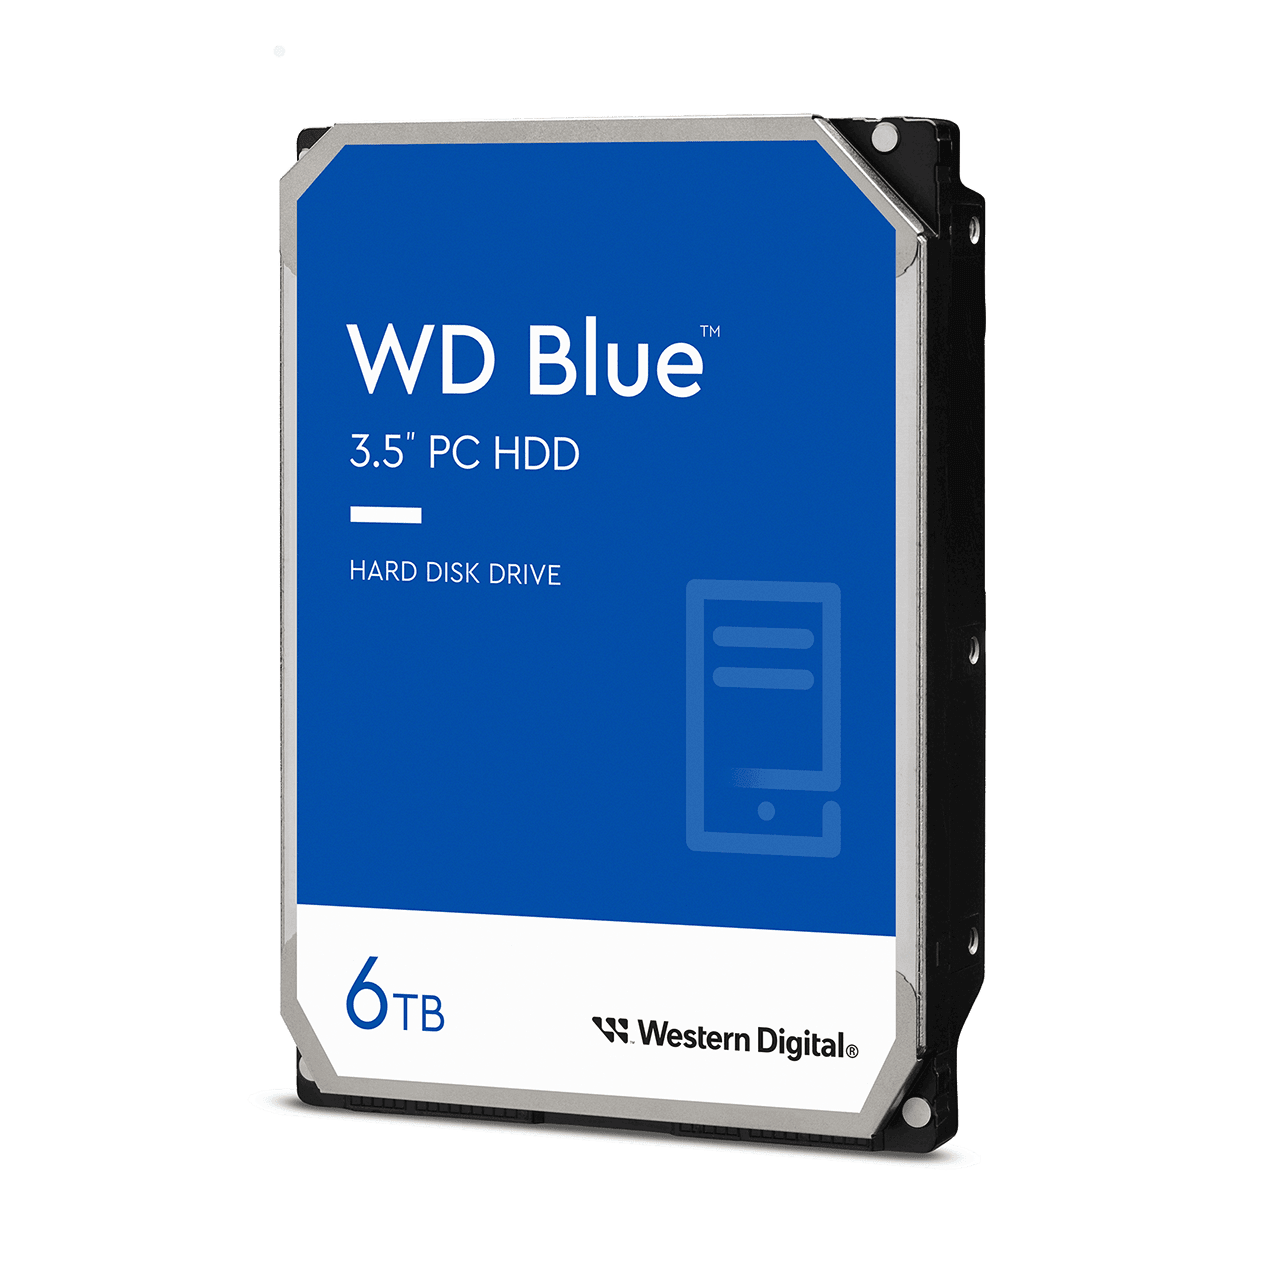 WD Blue 3.5in PC Hard Drive - 6TB - Image11